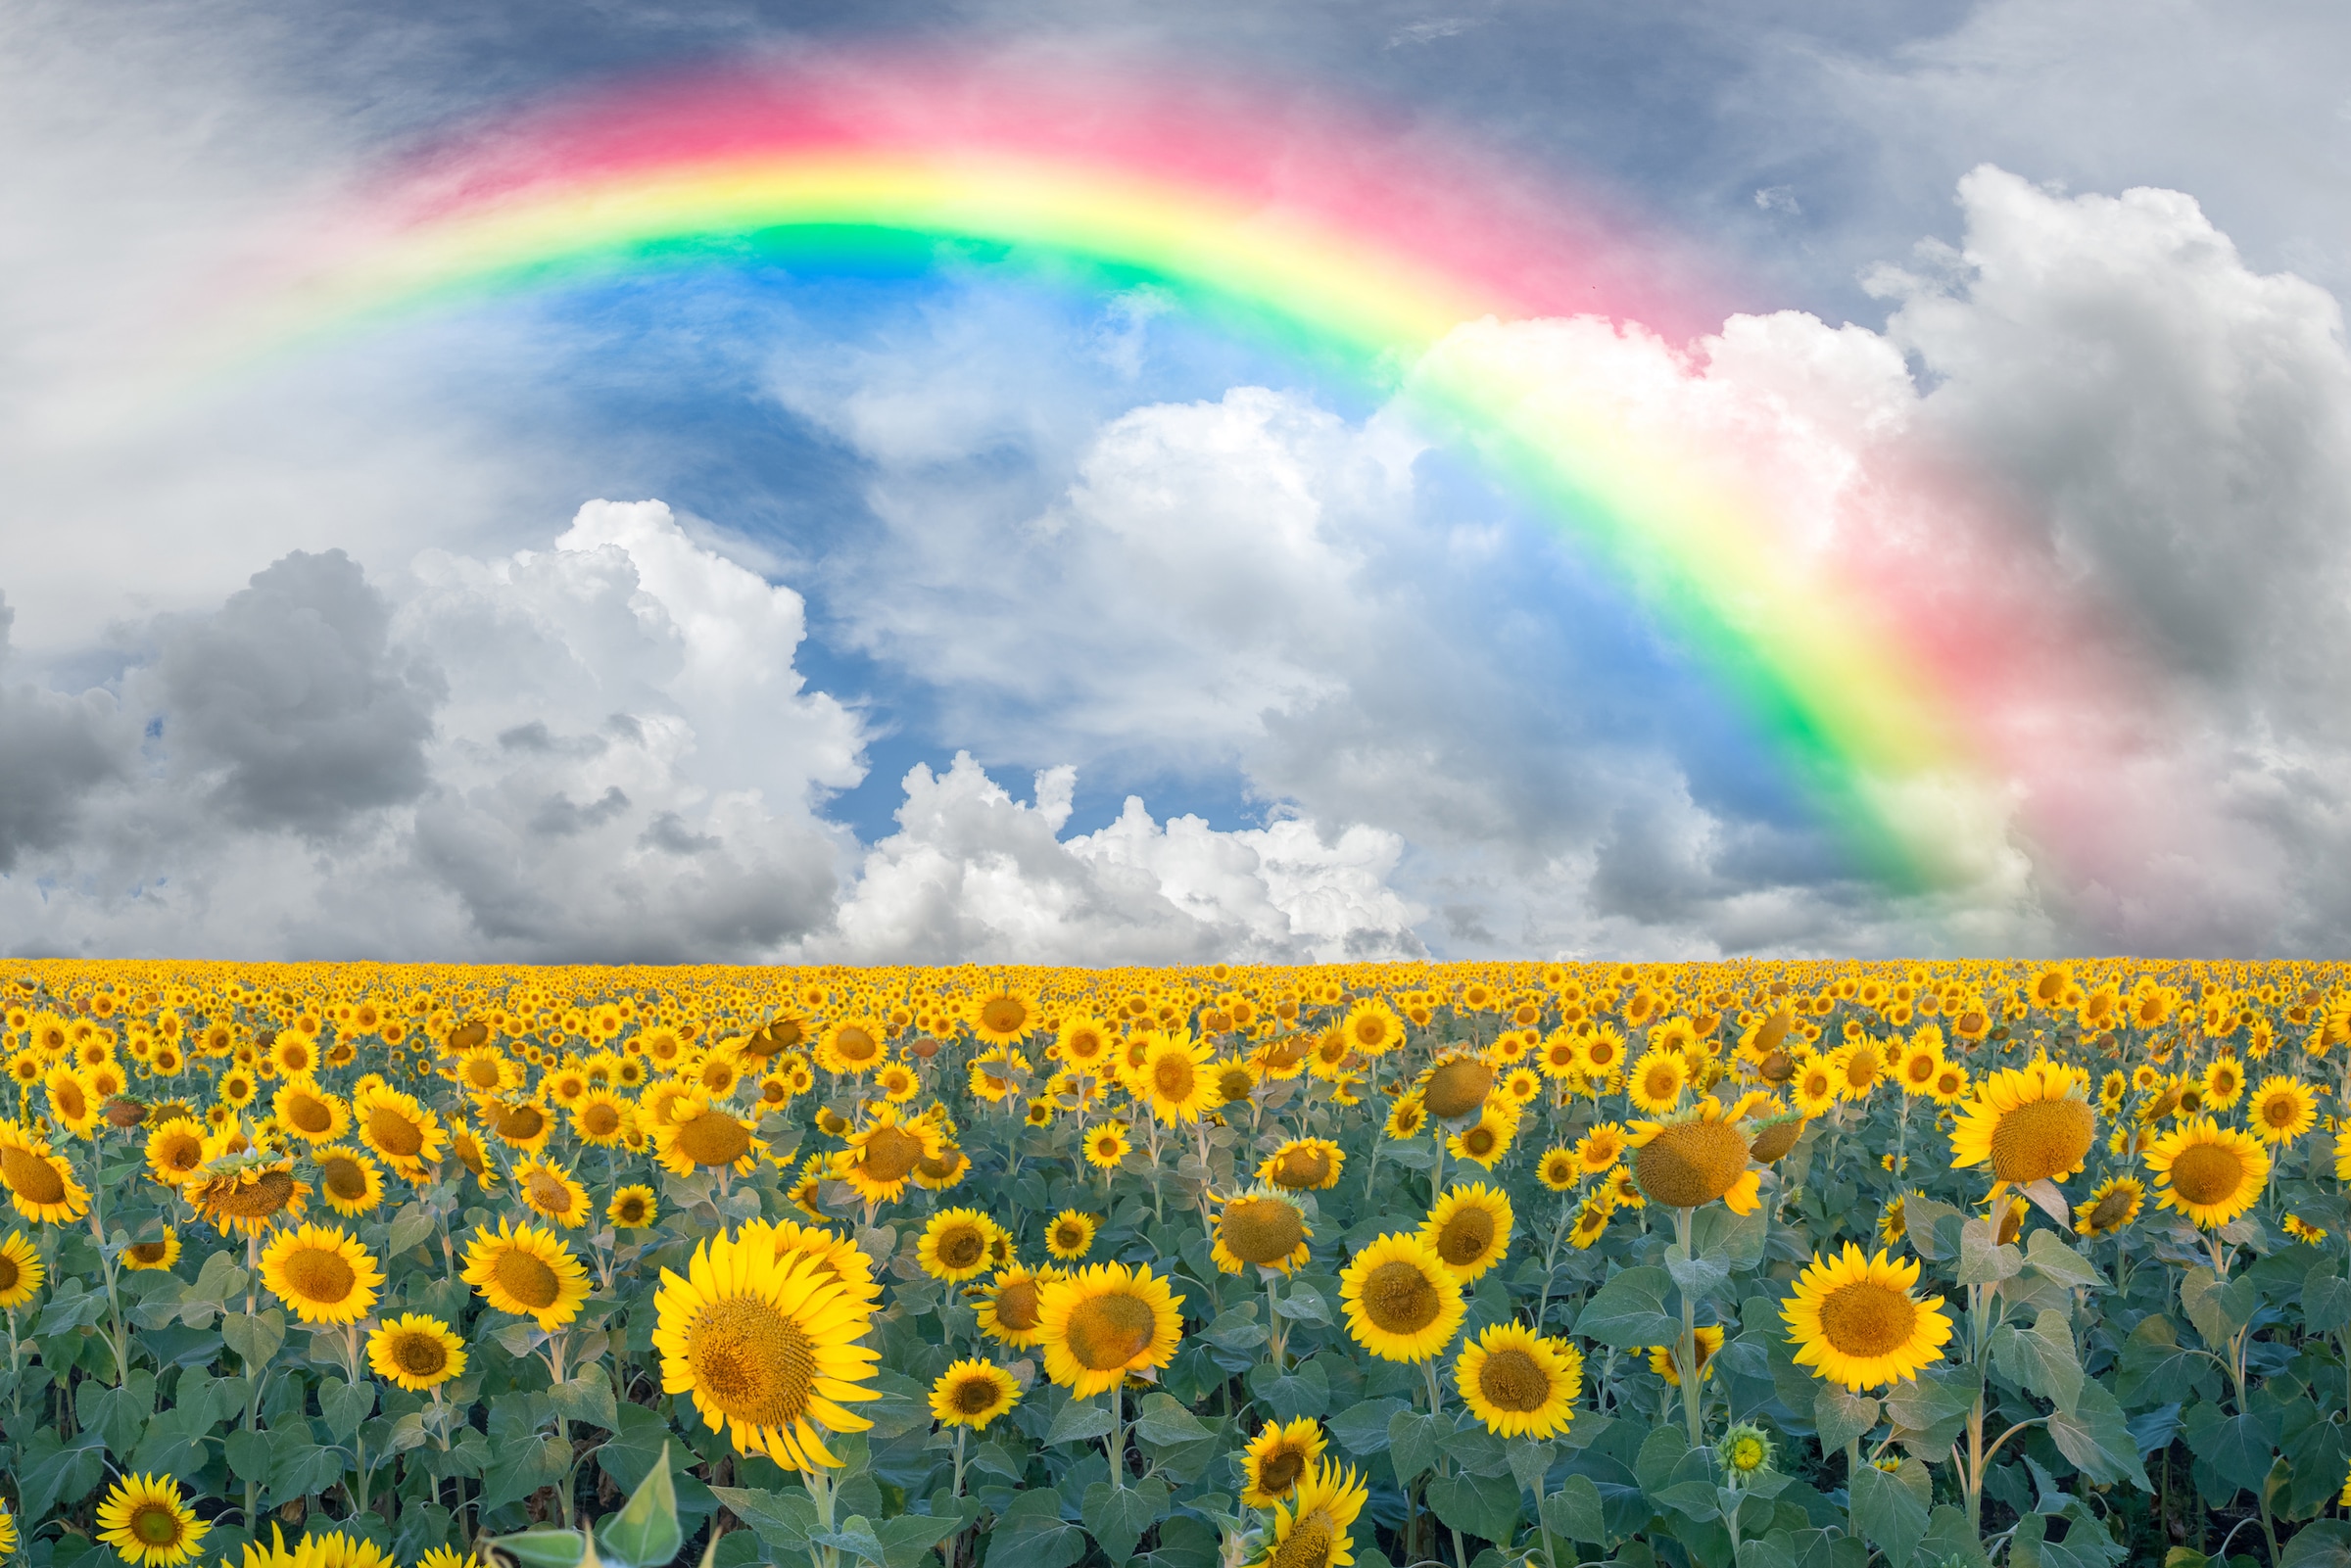 Papermoon Fototapete »Rainbow Sunflowers«